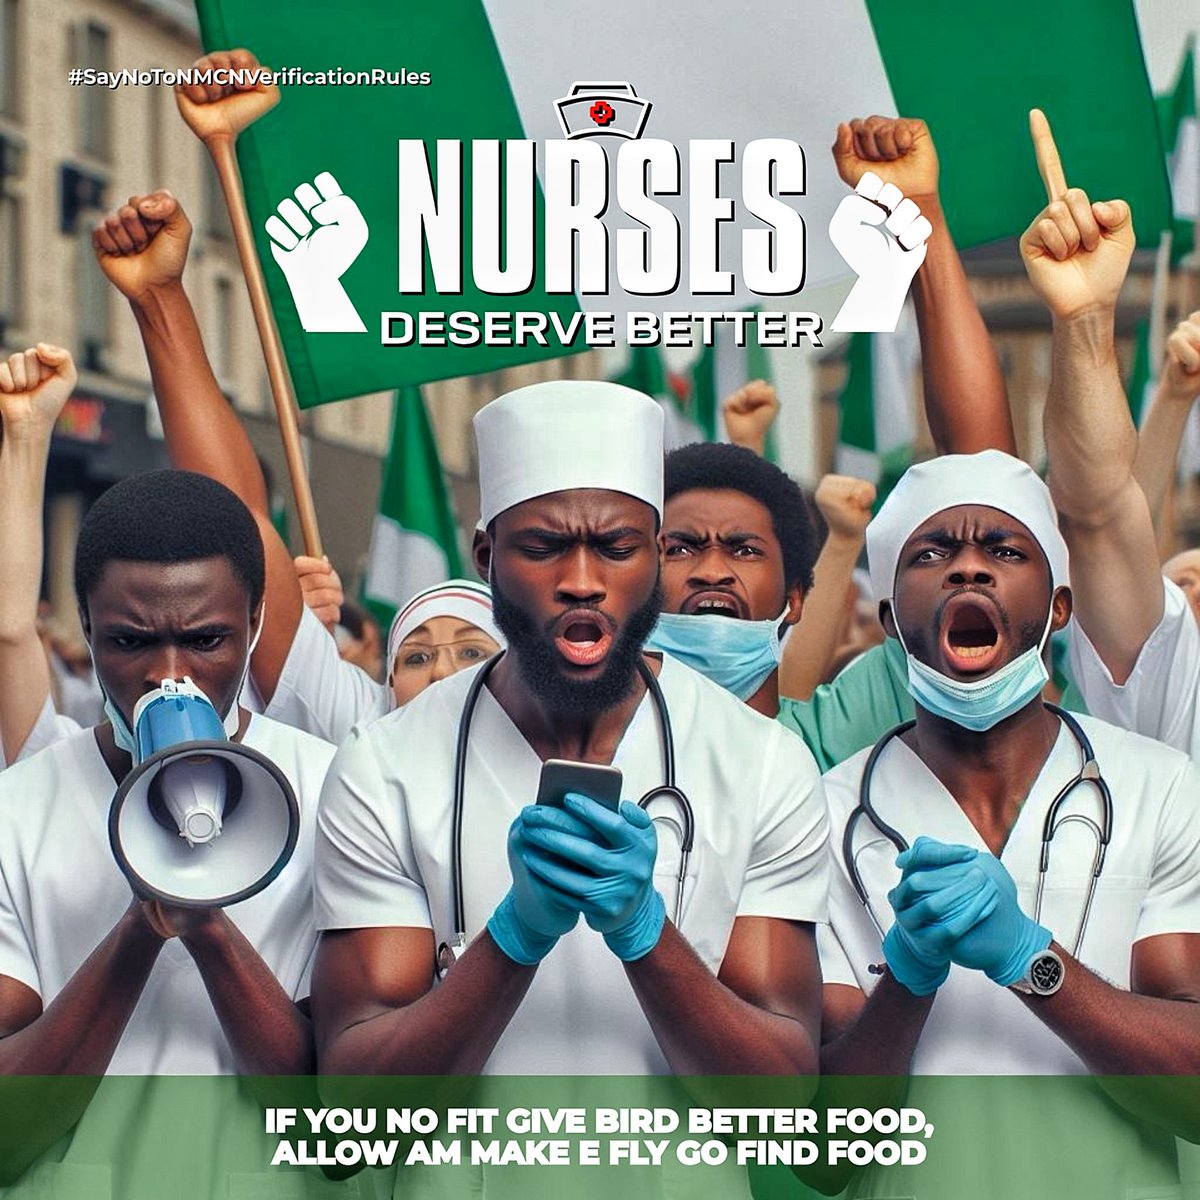 Nigerian nurses clamour in one voice that #NotoNMCNVerificationrule 
#NotoNMCNVerification